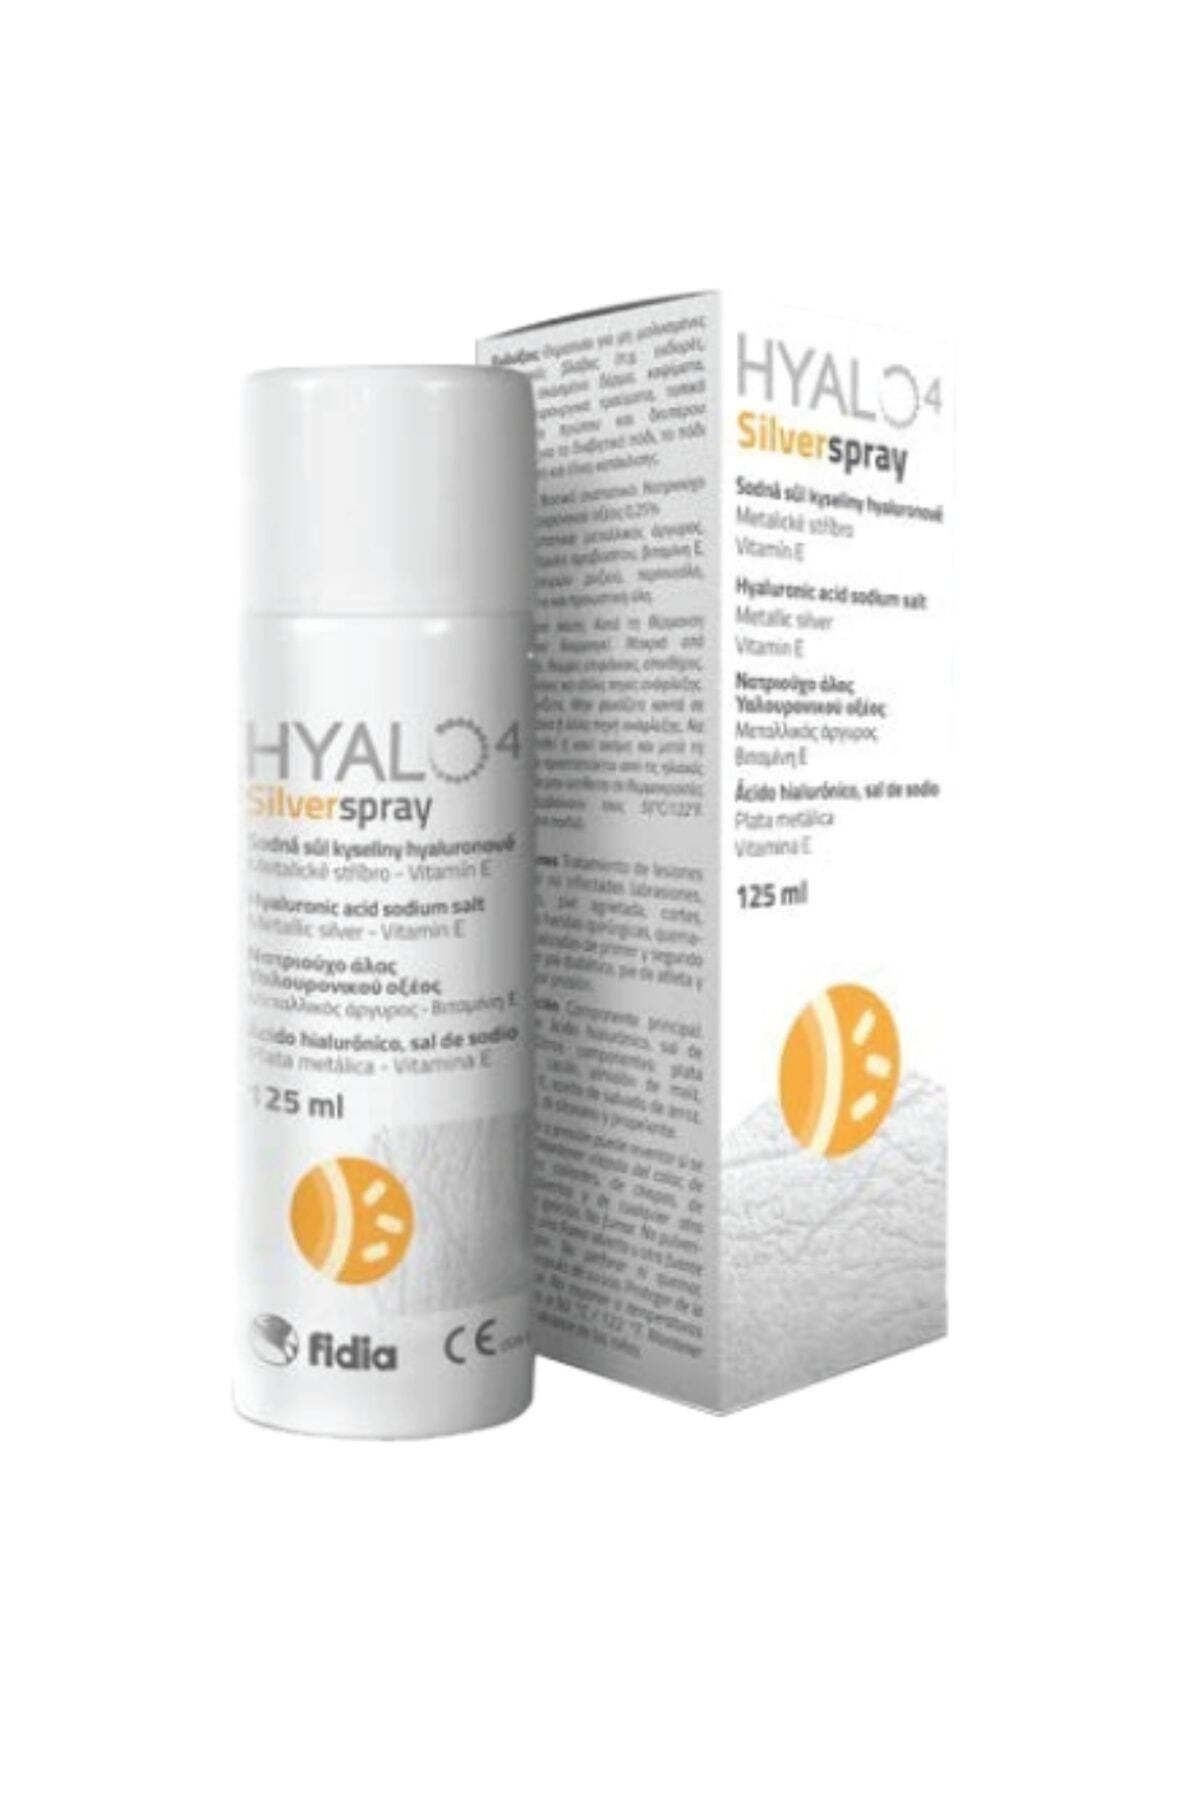 HYALO4 Silver Spray 50 ml